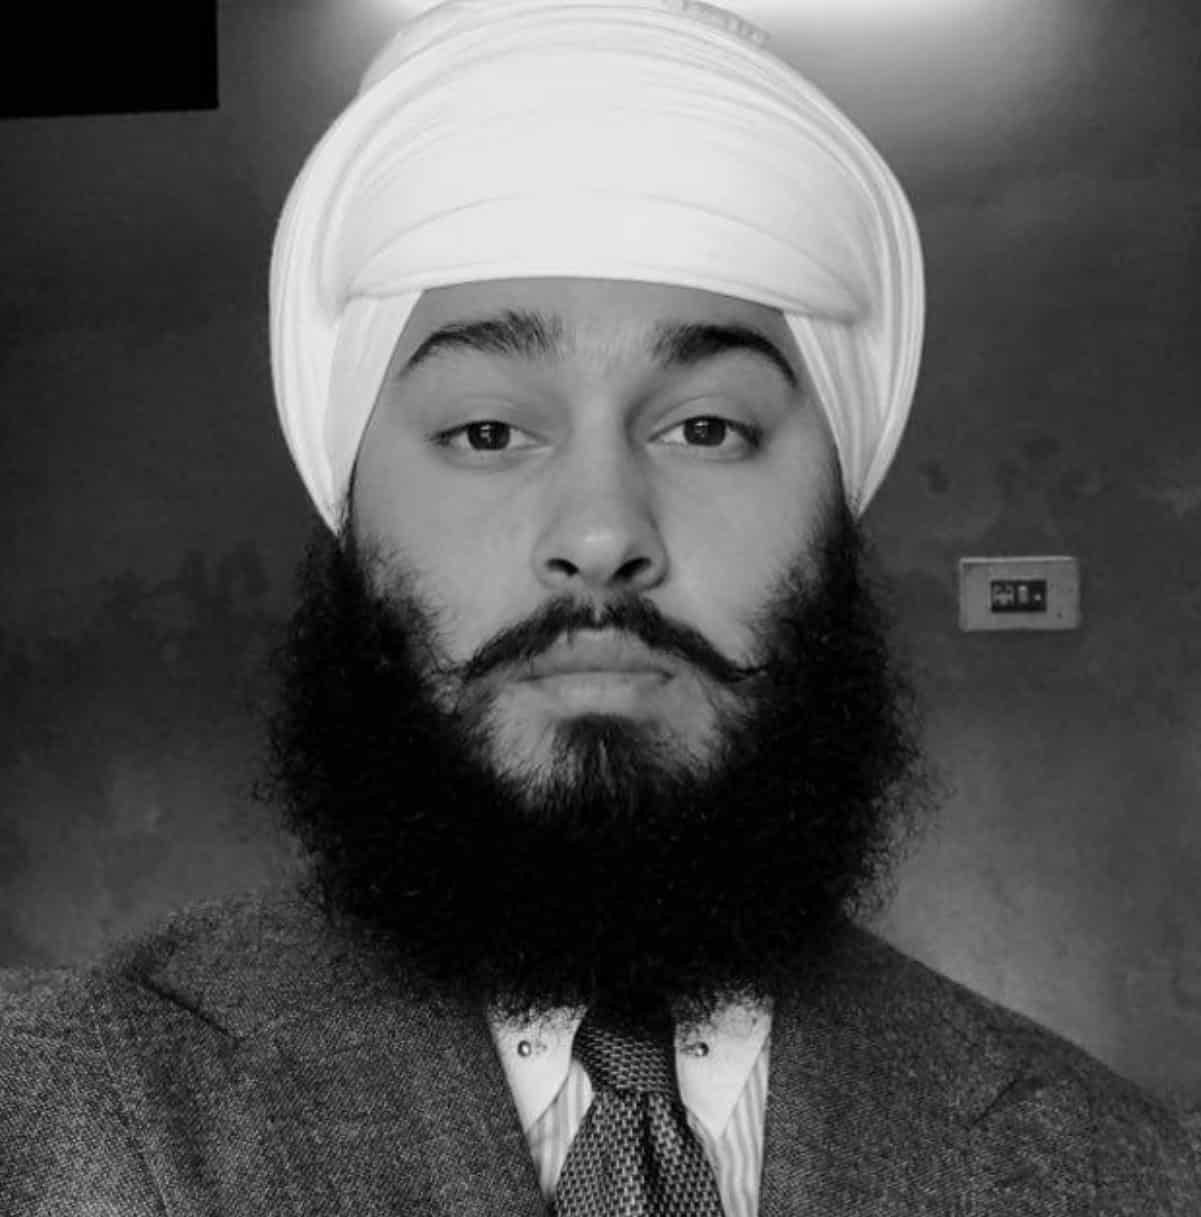 a man wearing a turban with a beard